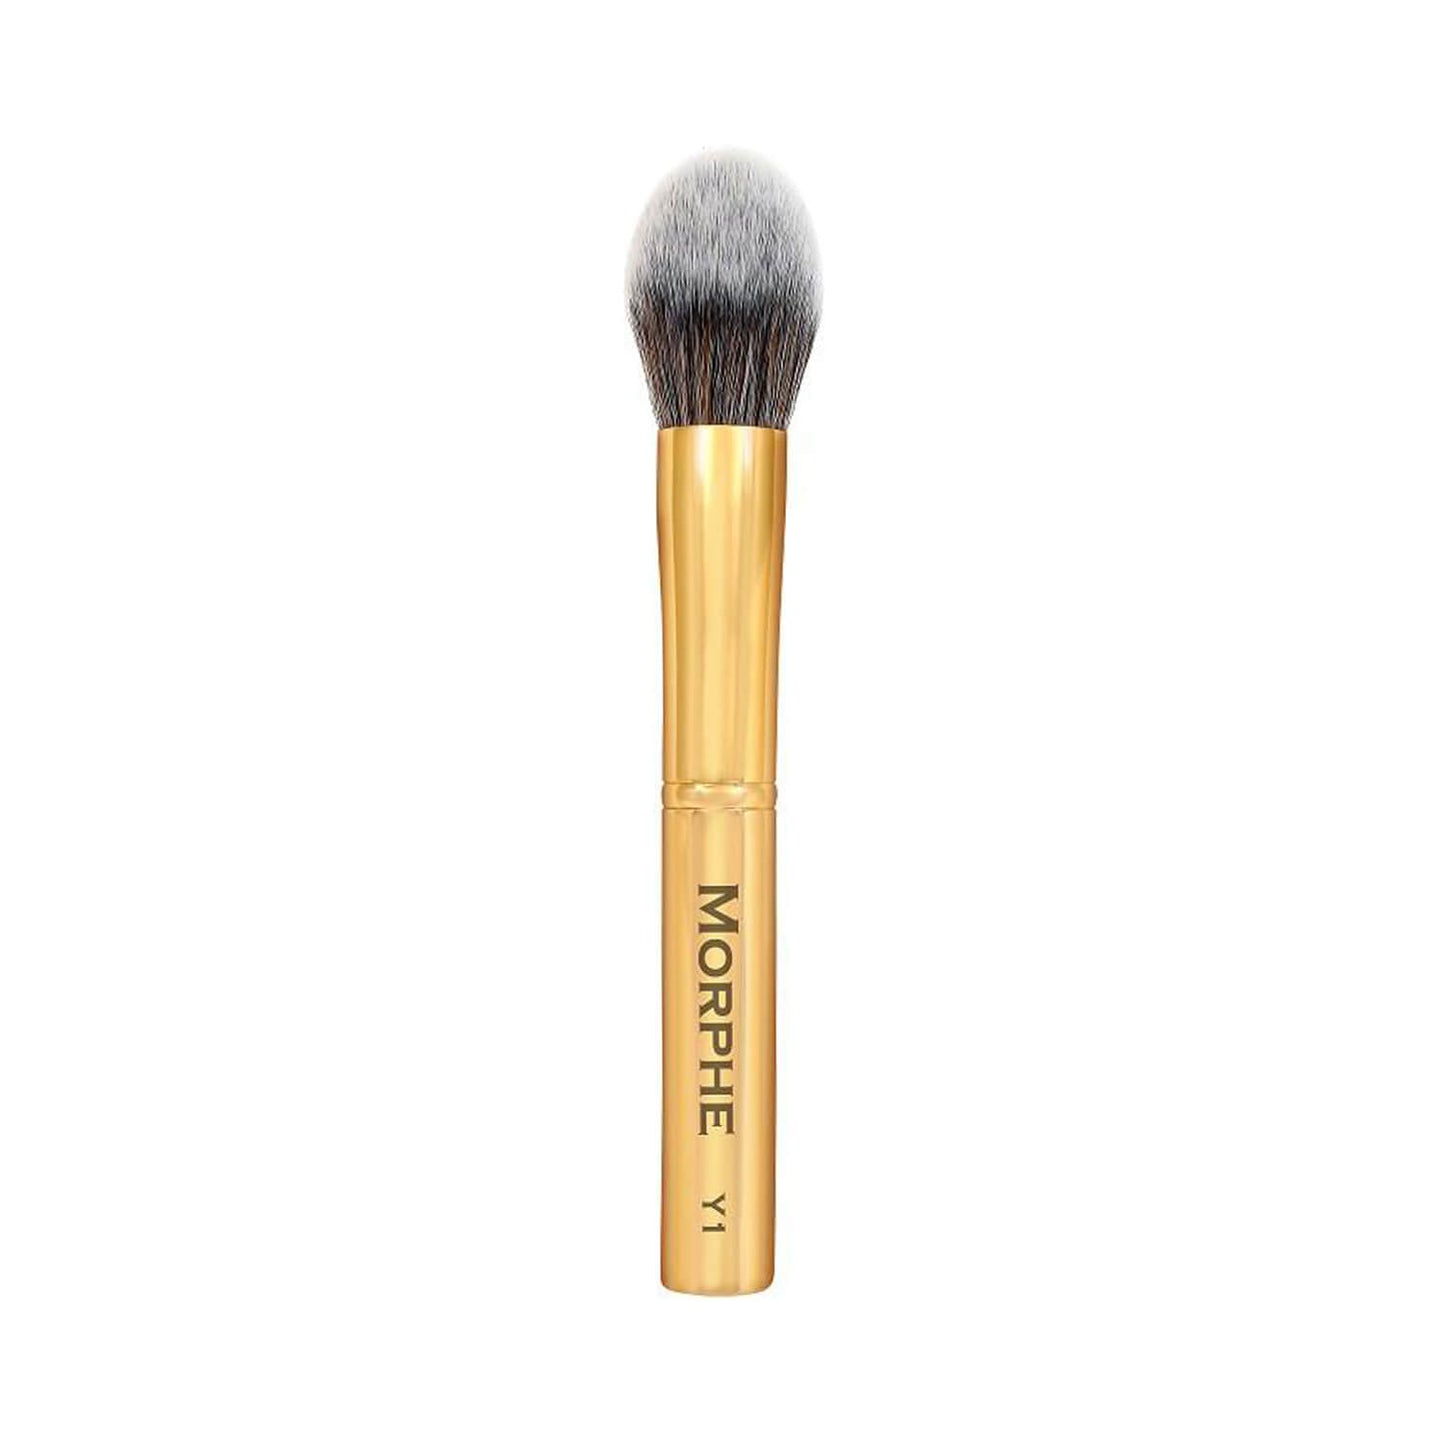 Morphe Cosmetics Y1 Precision Pointed Powder Brush